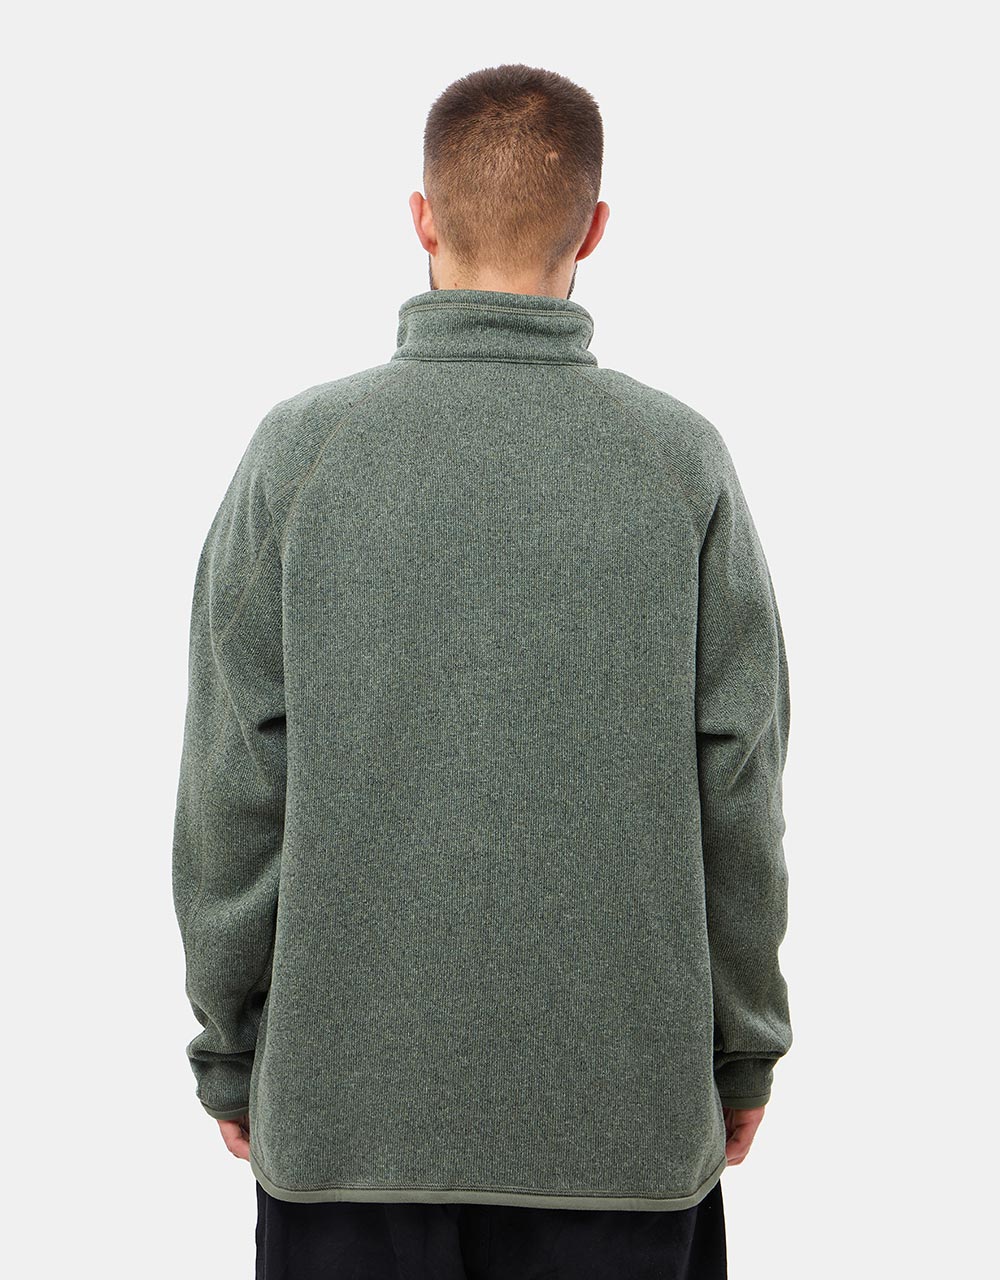 Patagonia Better Sweater® 1/4 Zip - Industrial Green